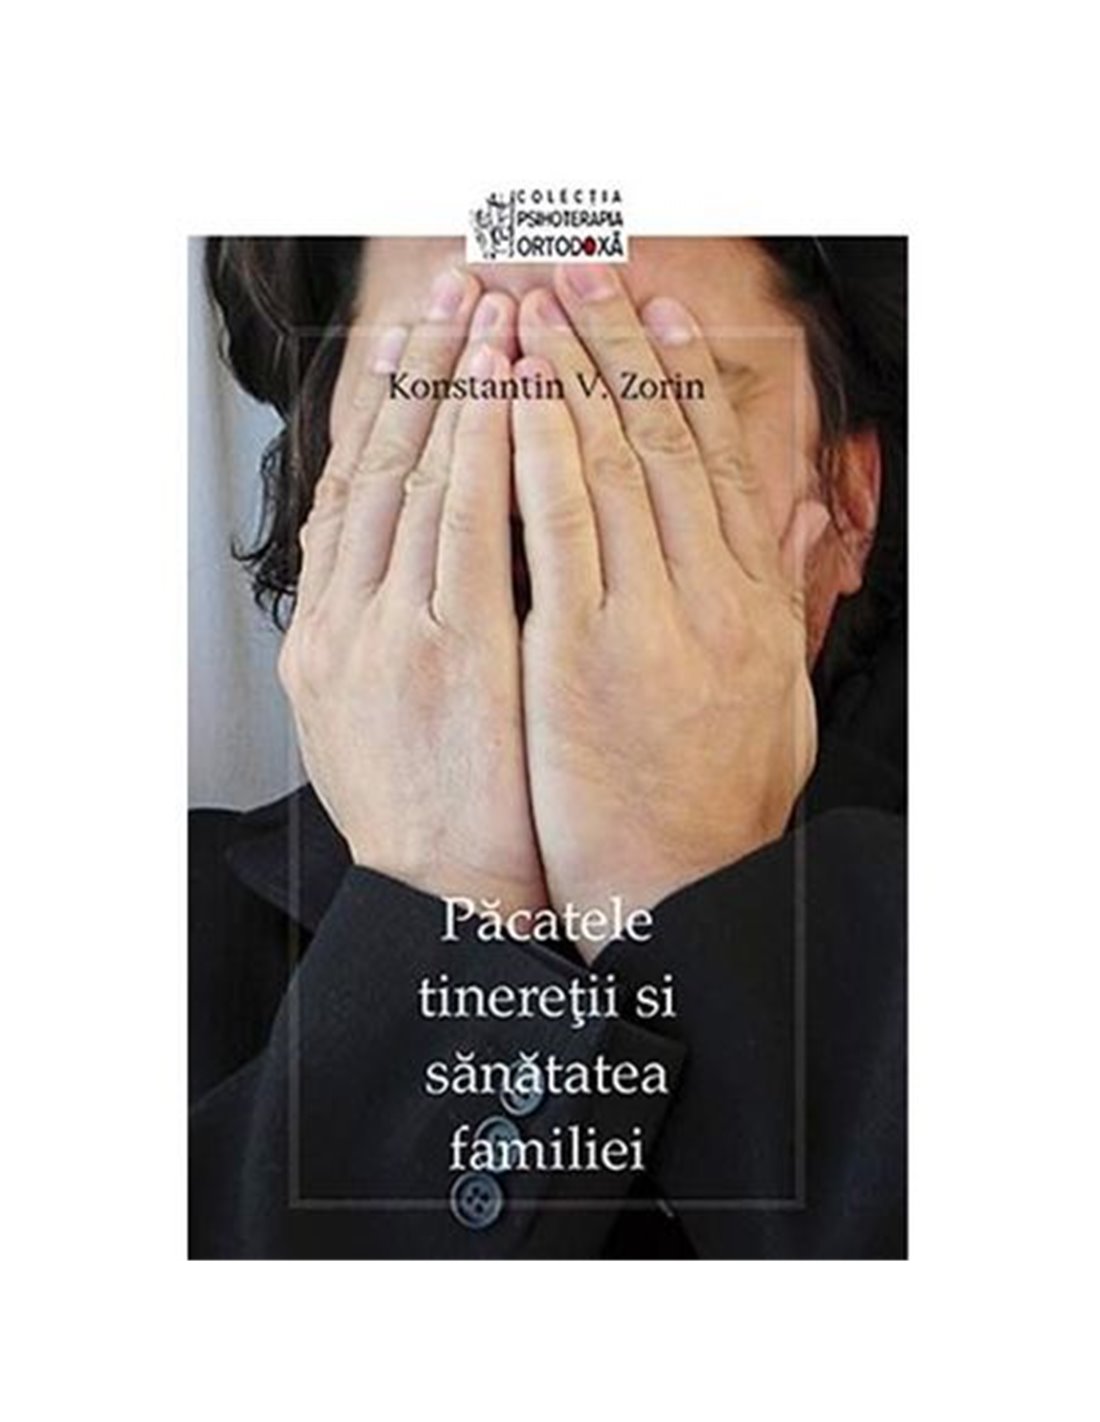 Pacatele tineretii si sanatatea familiei - Konstantin V. Zorin | Editura Sophia